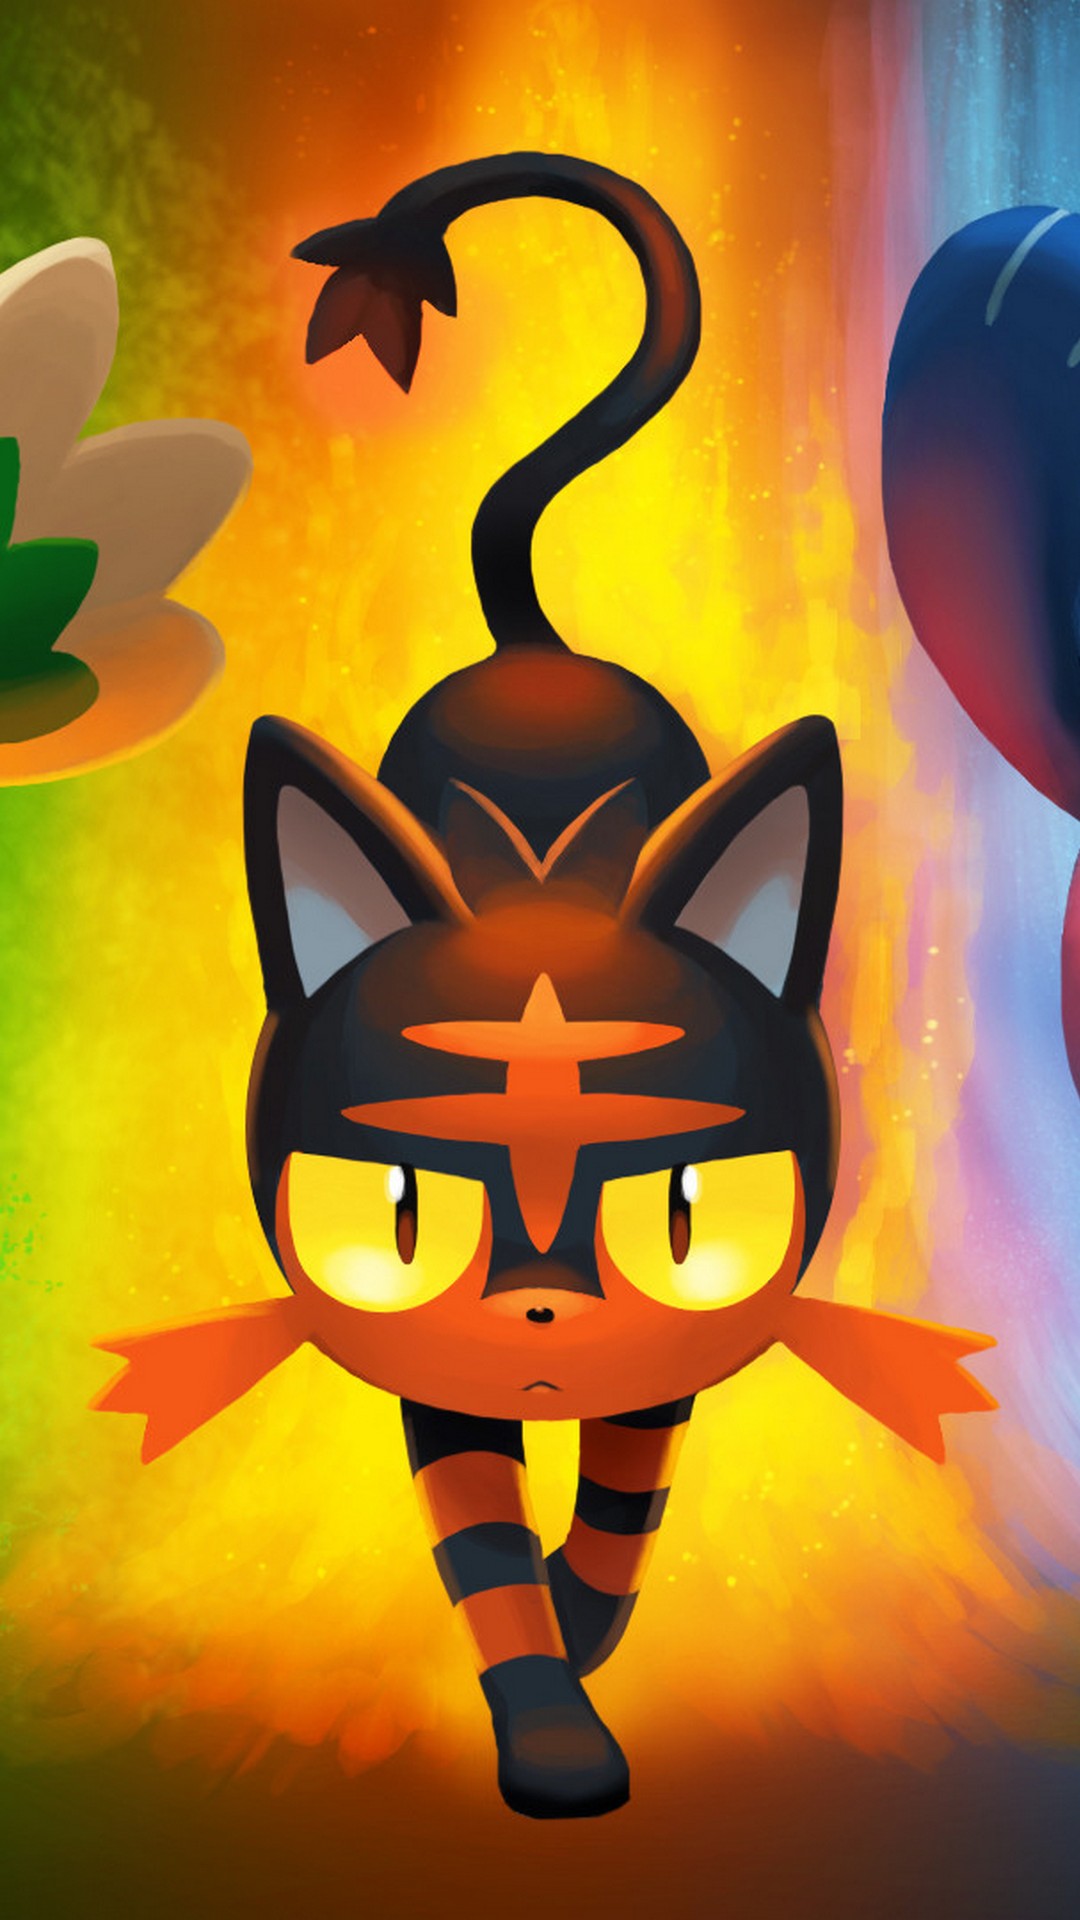 pokemon wallpaper hd,cartoon,black cat,cat,animated cartoon,illustration